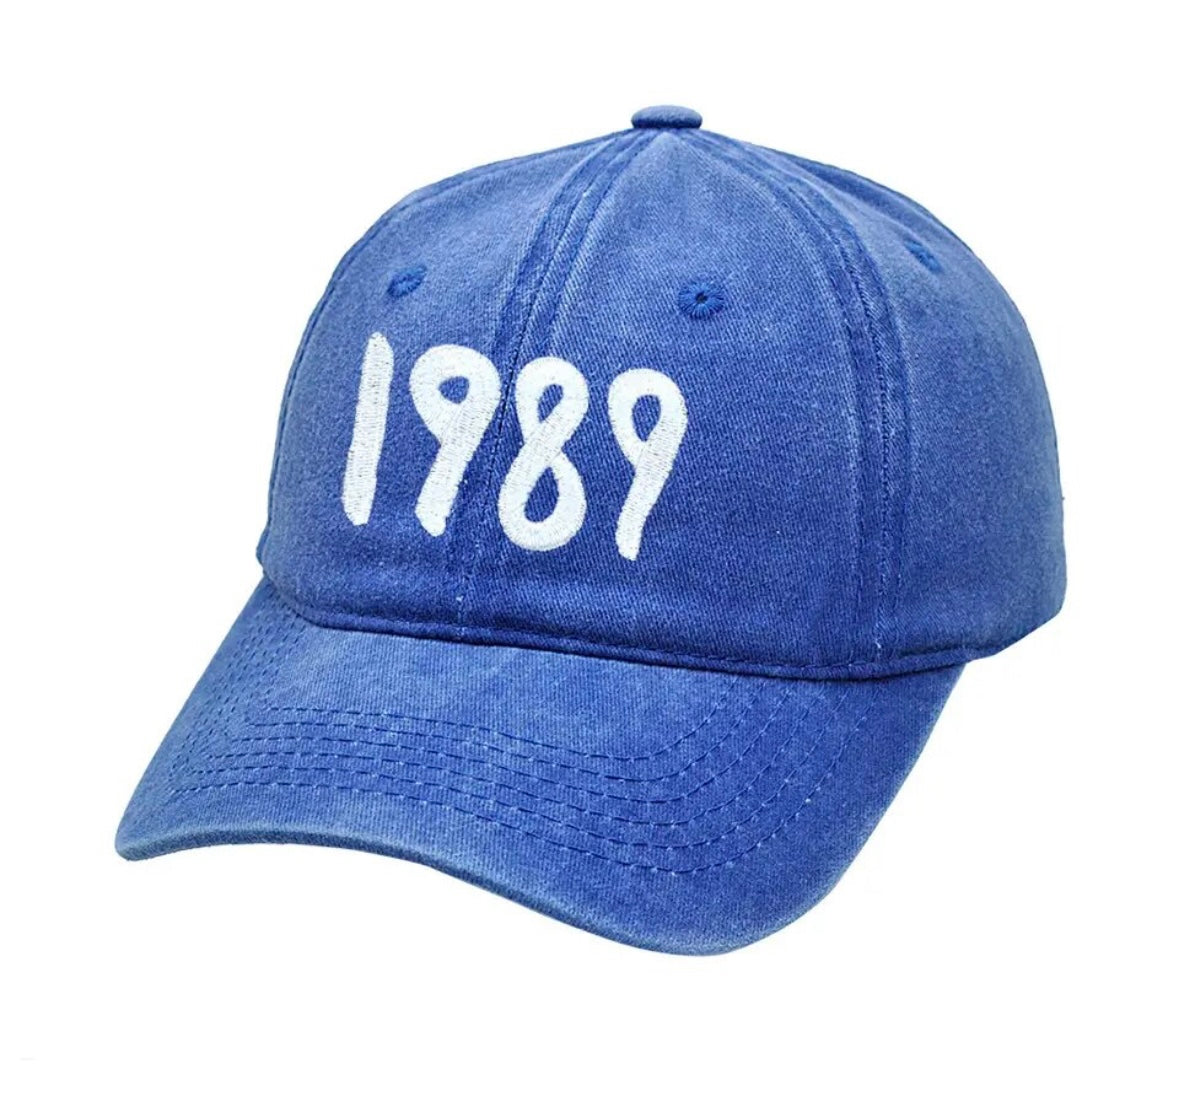 Taylor Swift 1989 Baseball Cap - Dark Blue